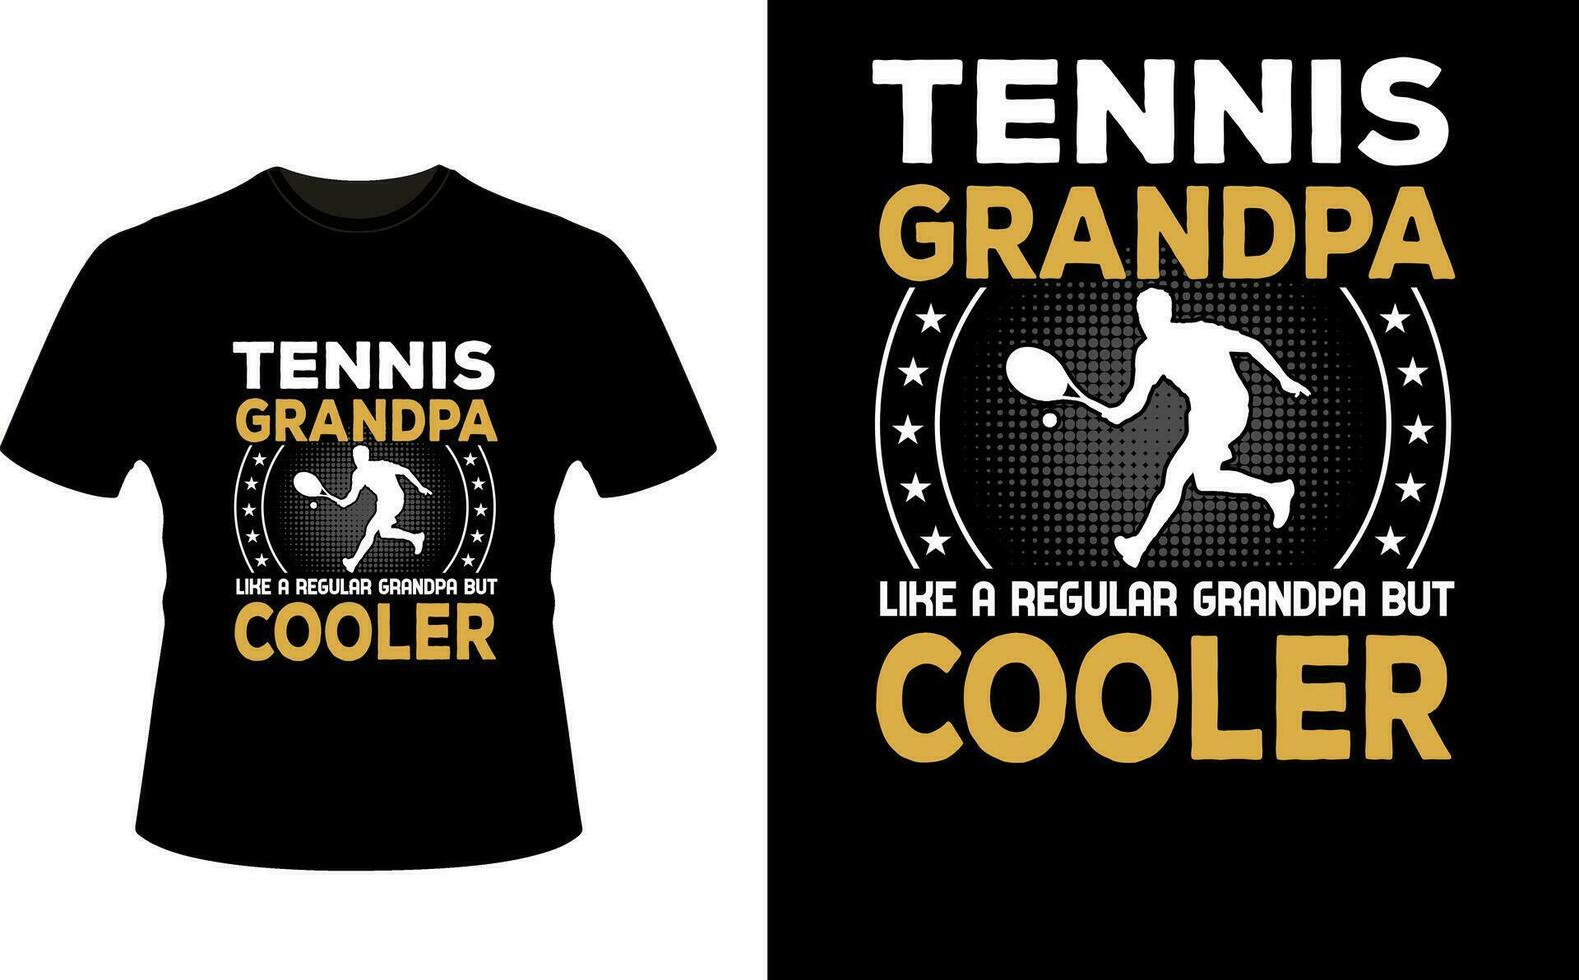 Tennis Grandpa Like a Regular Grandpa But Cooler or Grandfather tshirt design or Grandfather day t shirt Design vector